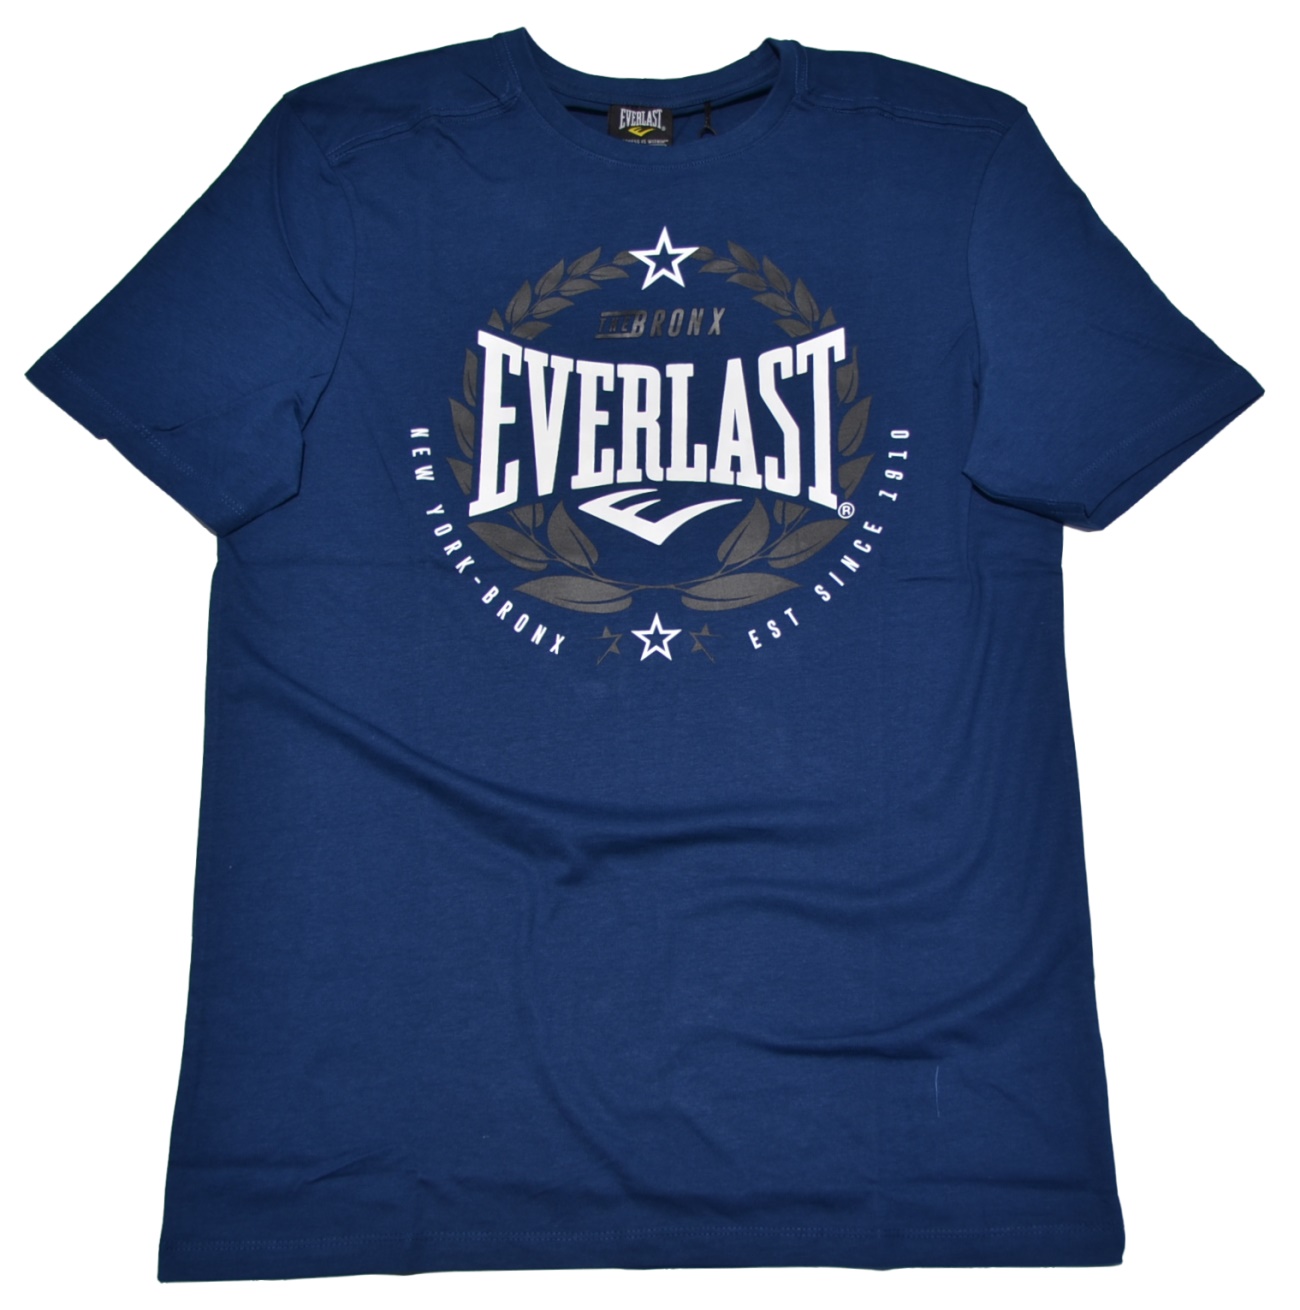 Everlast T-Shirt T shirt Tshirt Kurzarm Herren Top Freizeit Laurel L XL 2XL 6019 